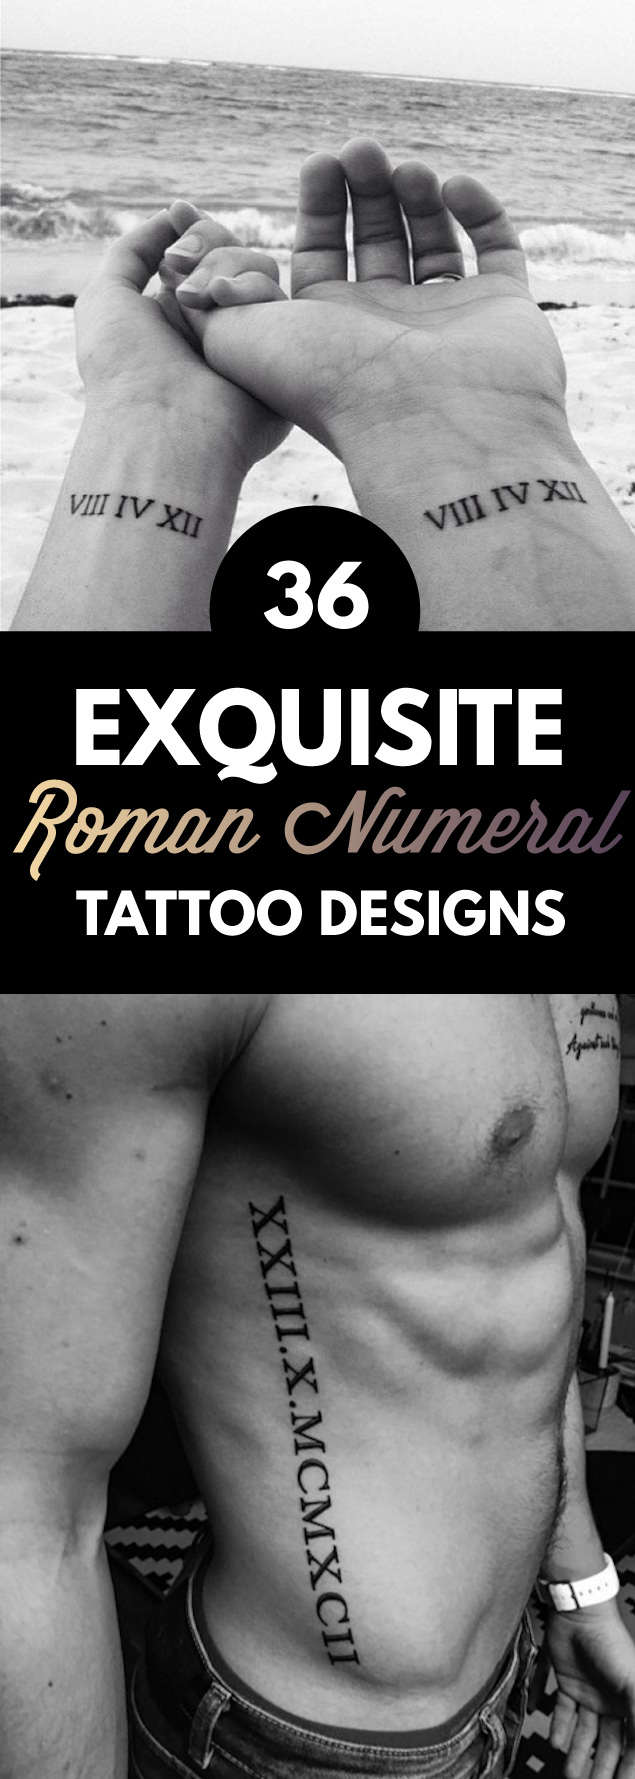 23 Exquisite Roman Numeral Tattoo Designs - TattooBlend